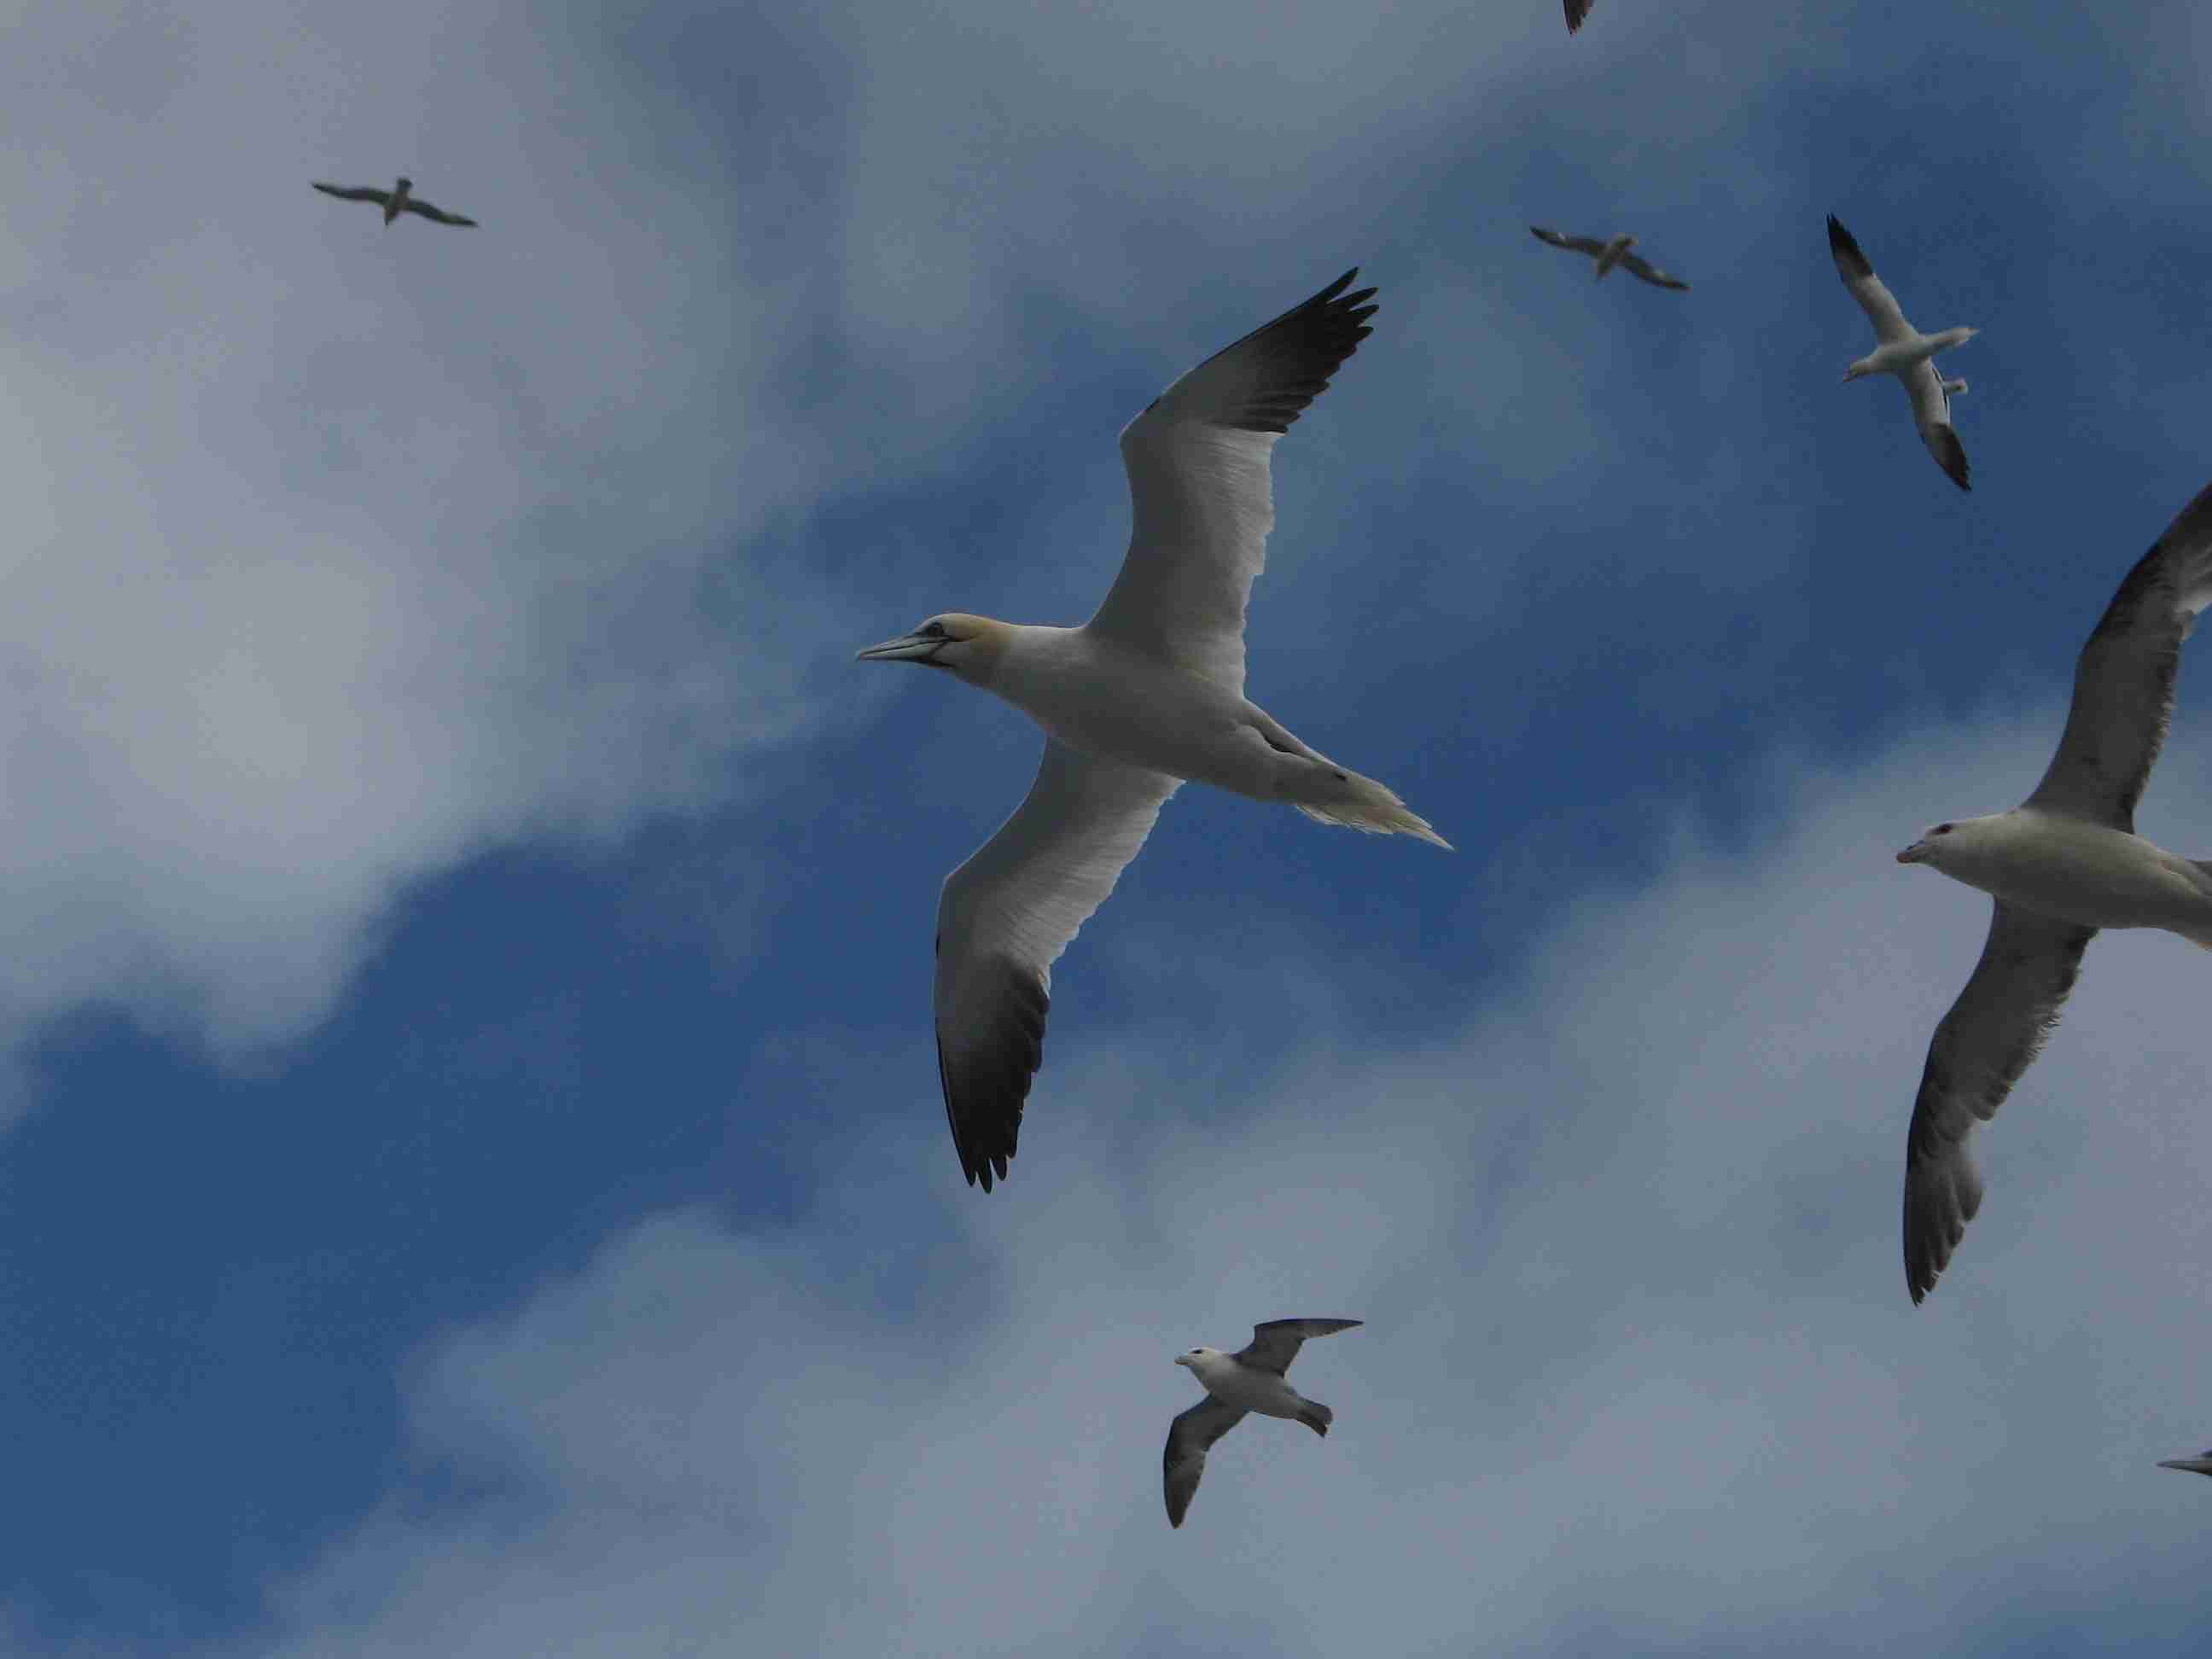 NIRAS - Phase 1 seabirds and their environment